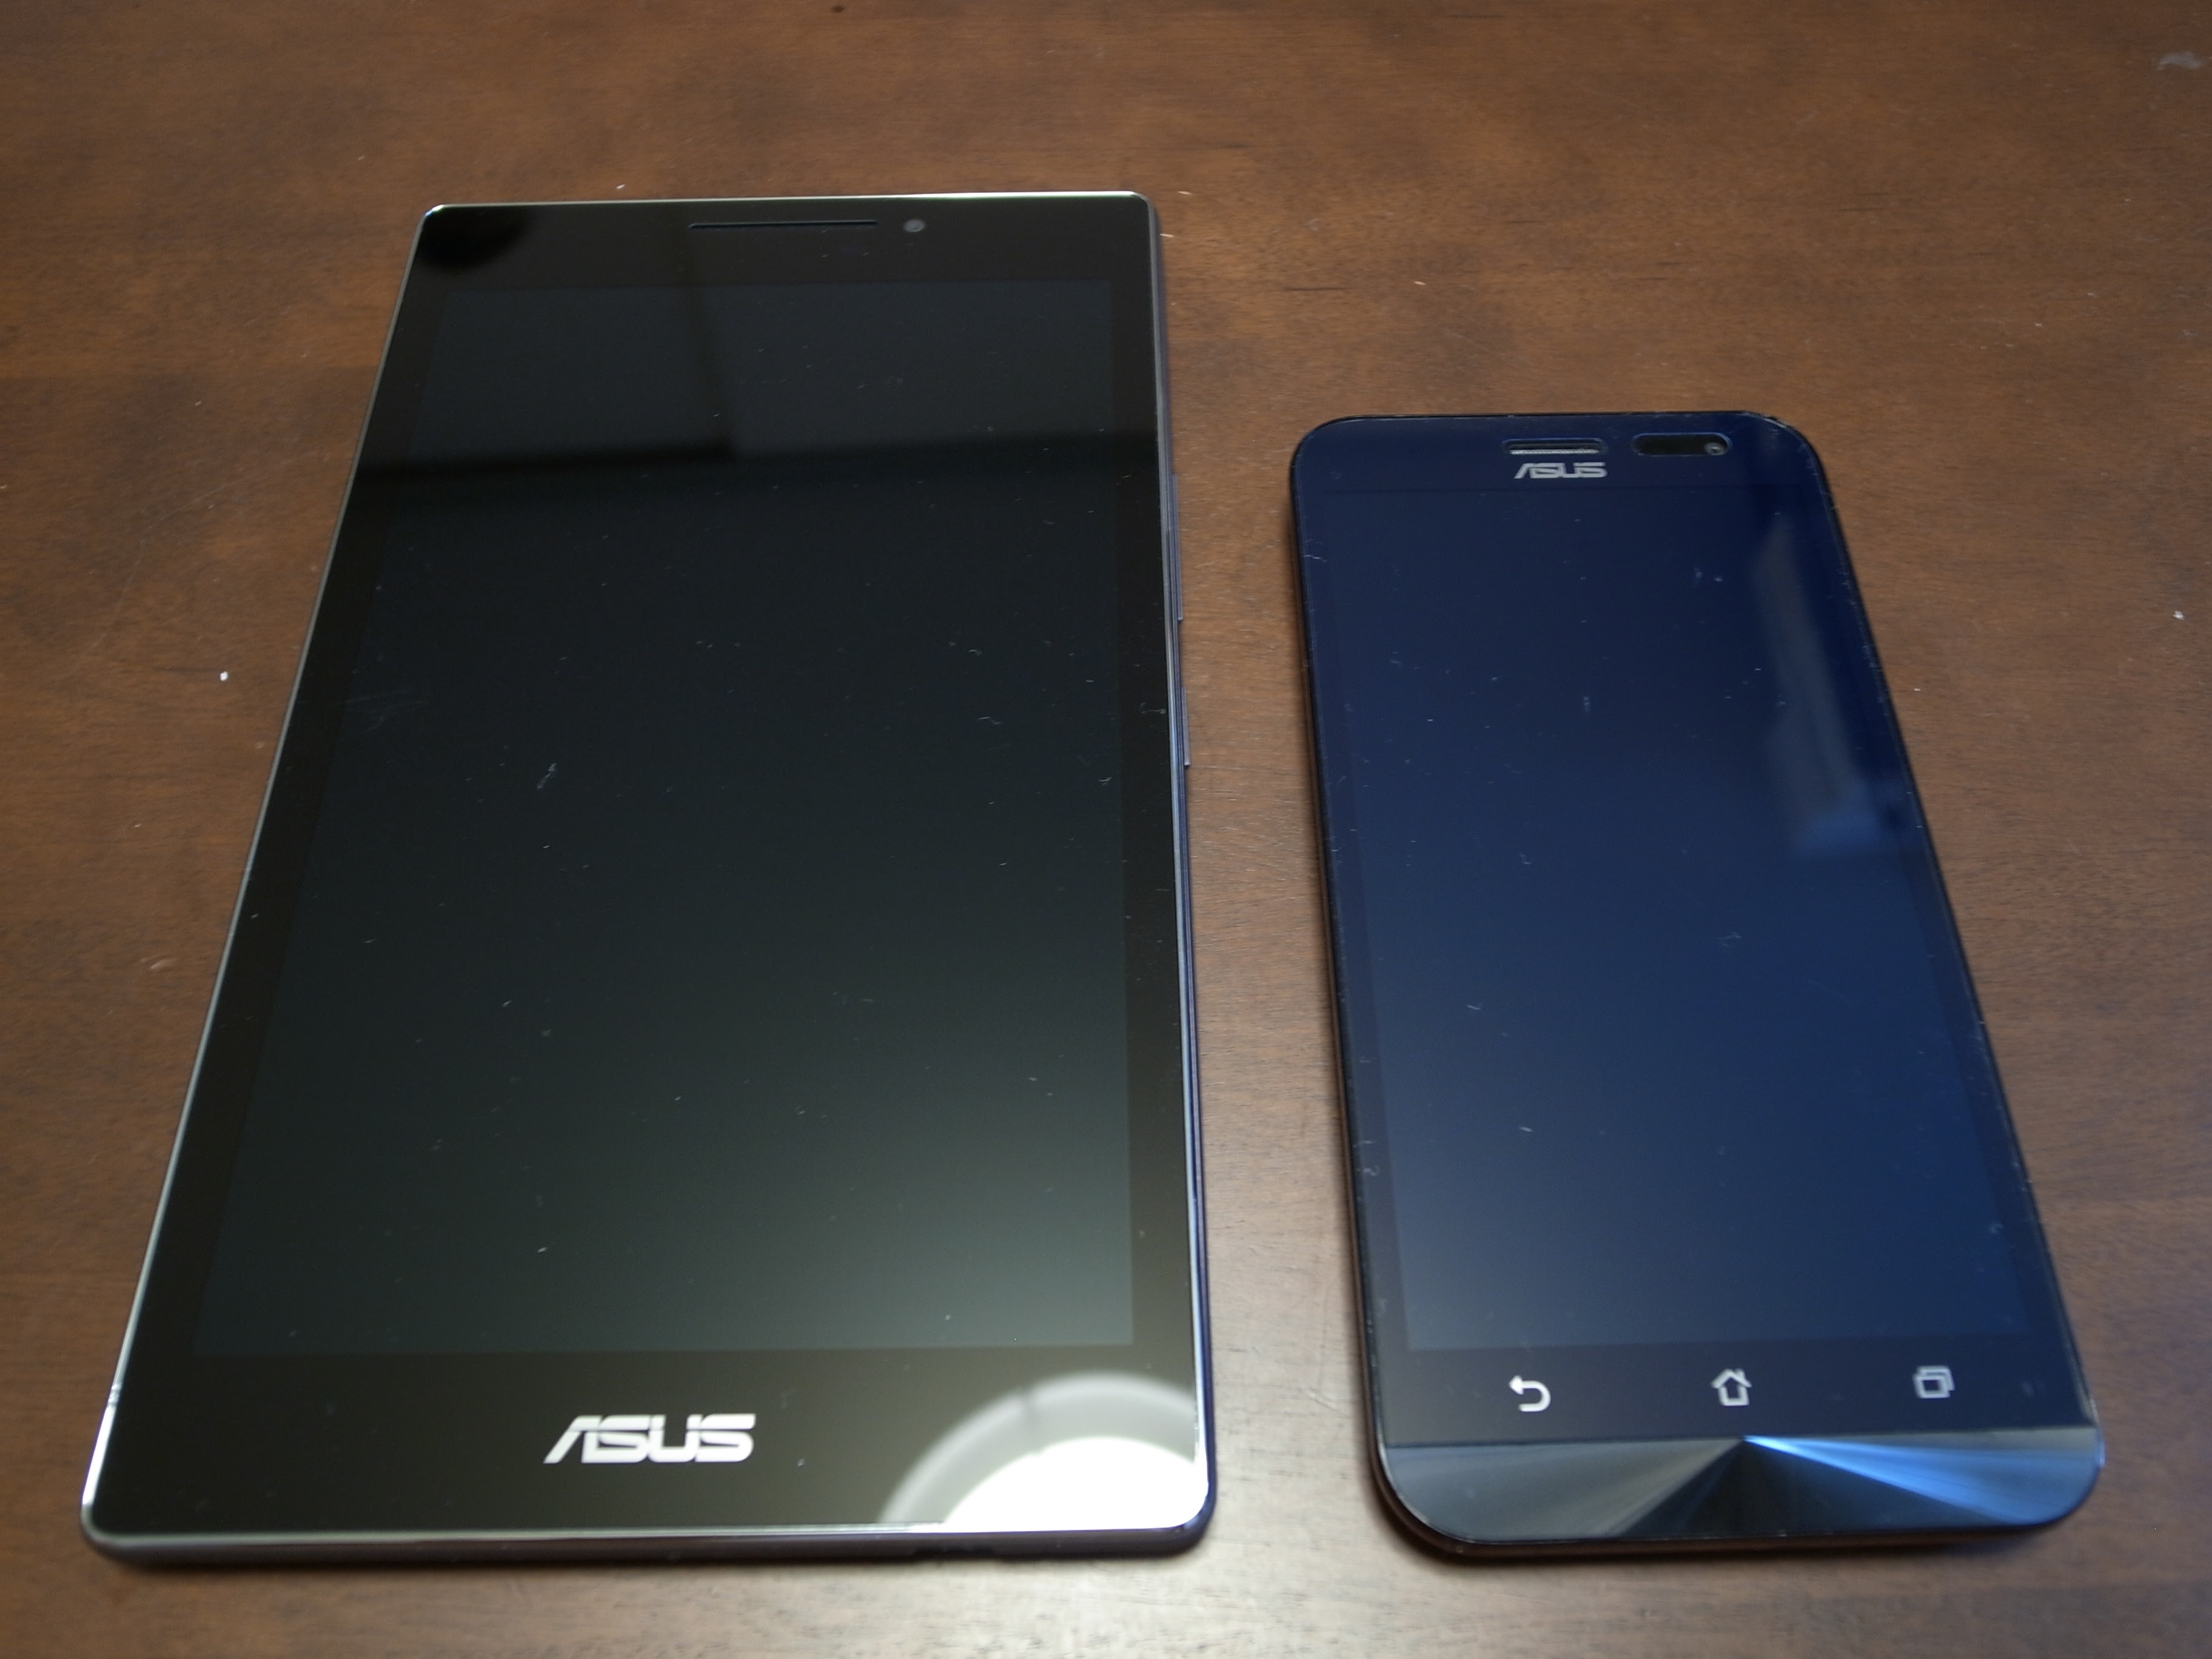 1005-201508_ASUS ZenPad Z370C 08